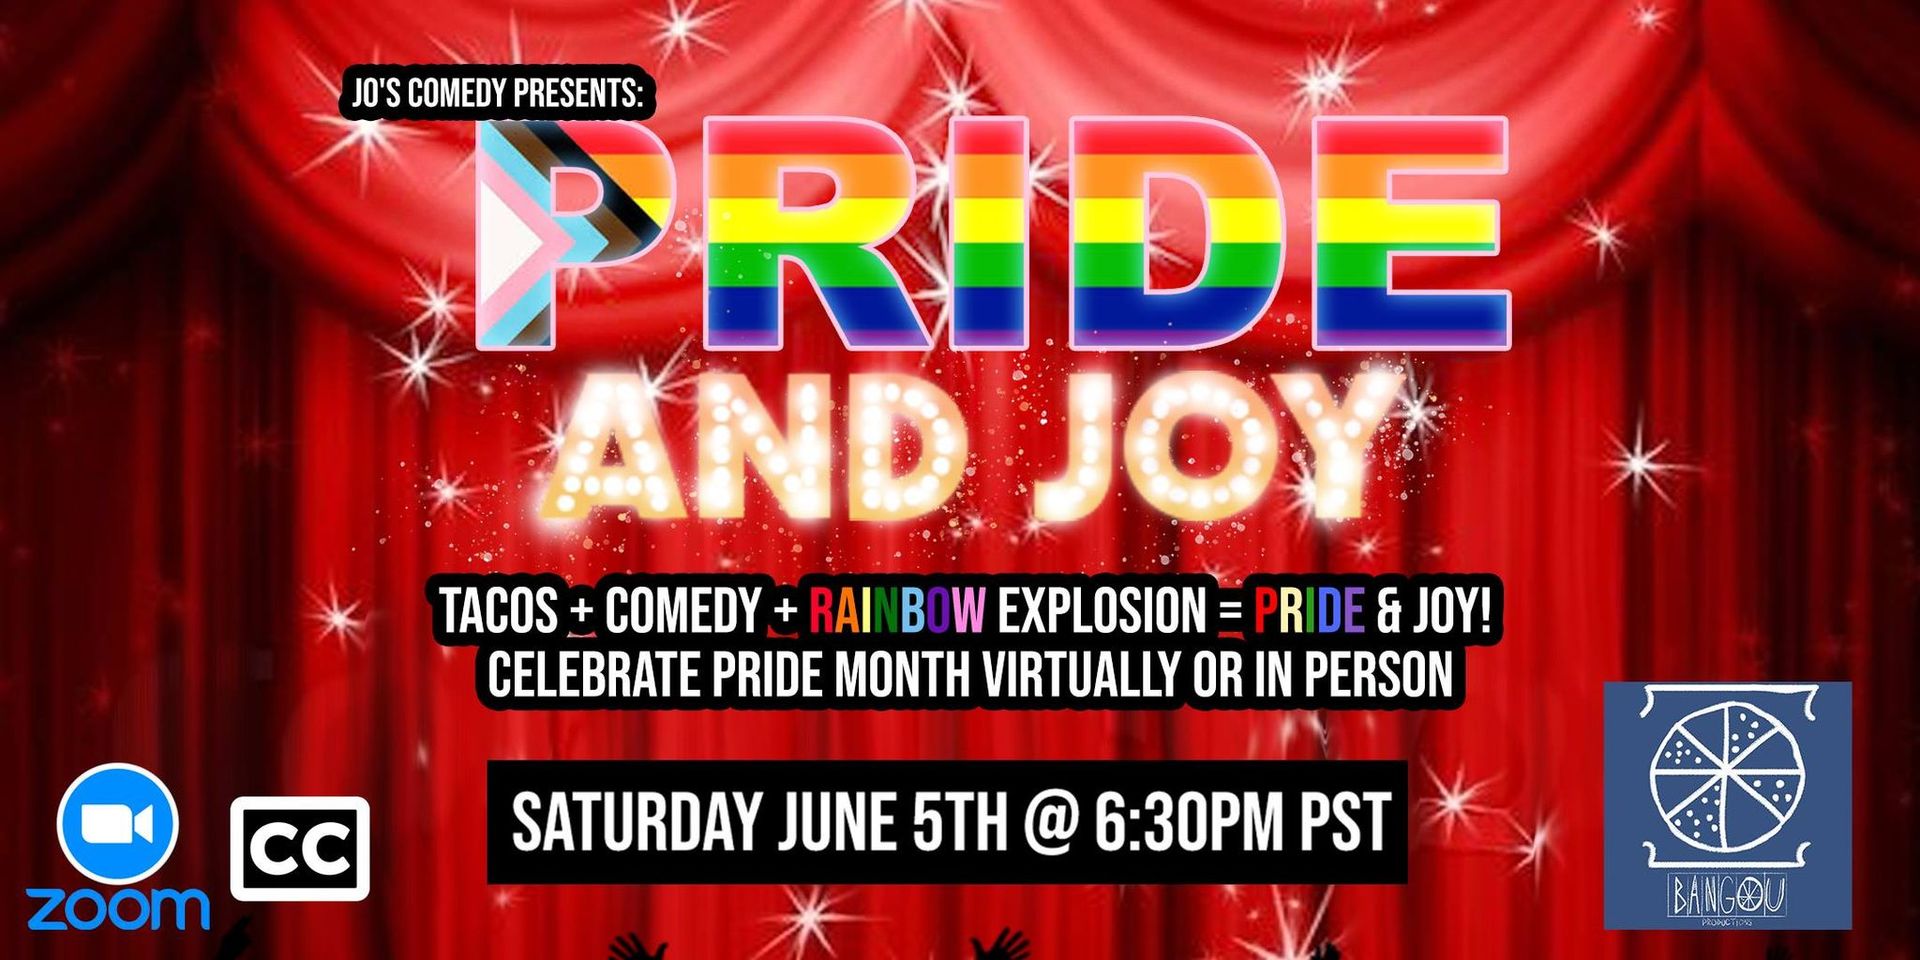 Jo's Comedy Presents: Pride and Joy - Tacos + Comedy for PRIDE Month, Santa Clara, California, United States